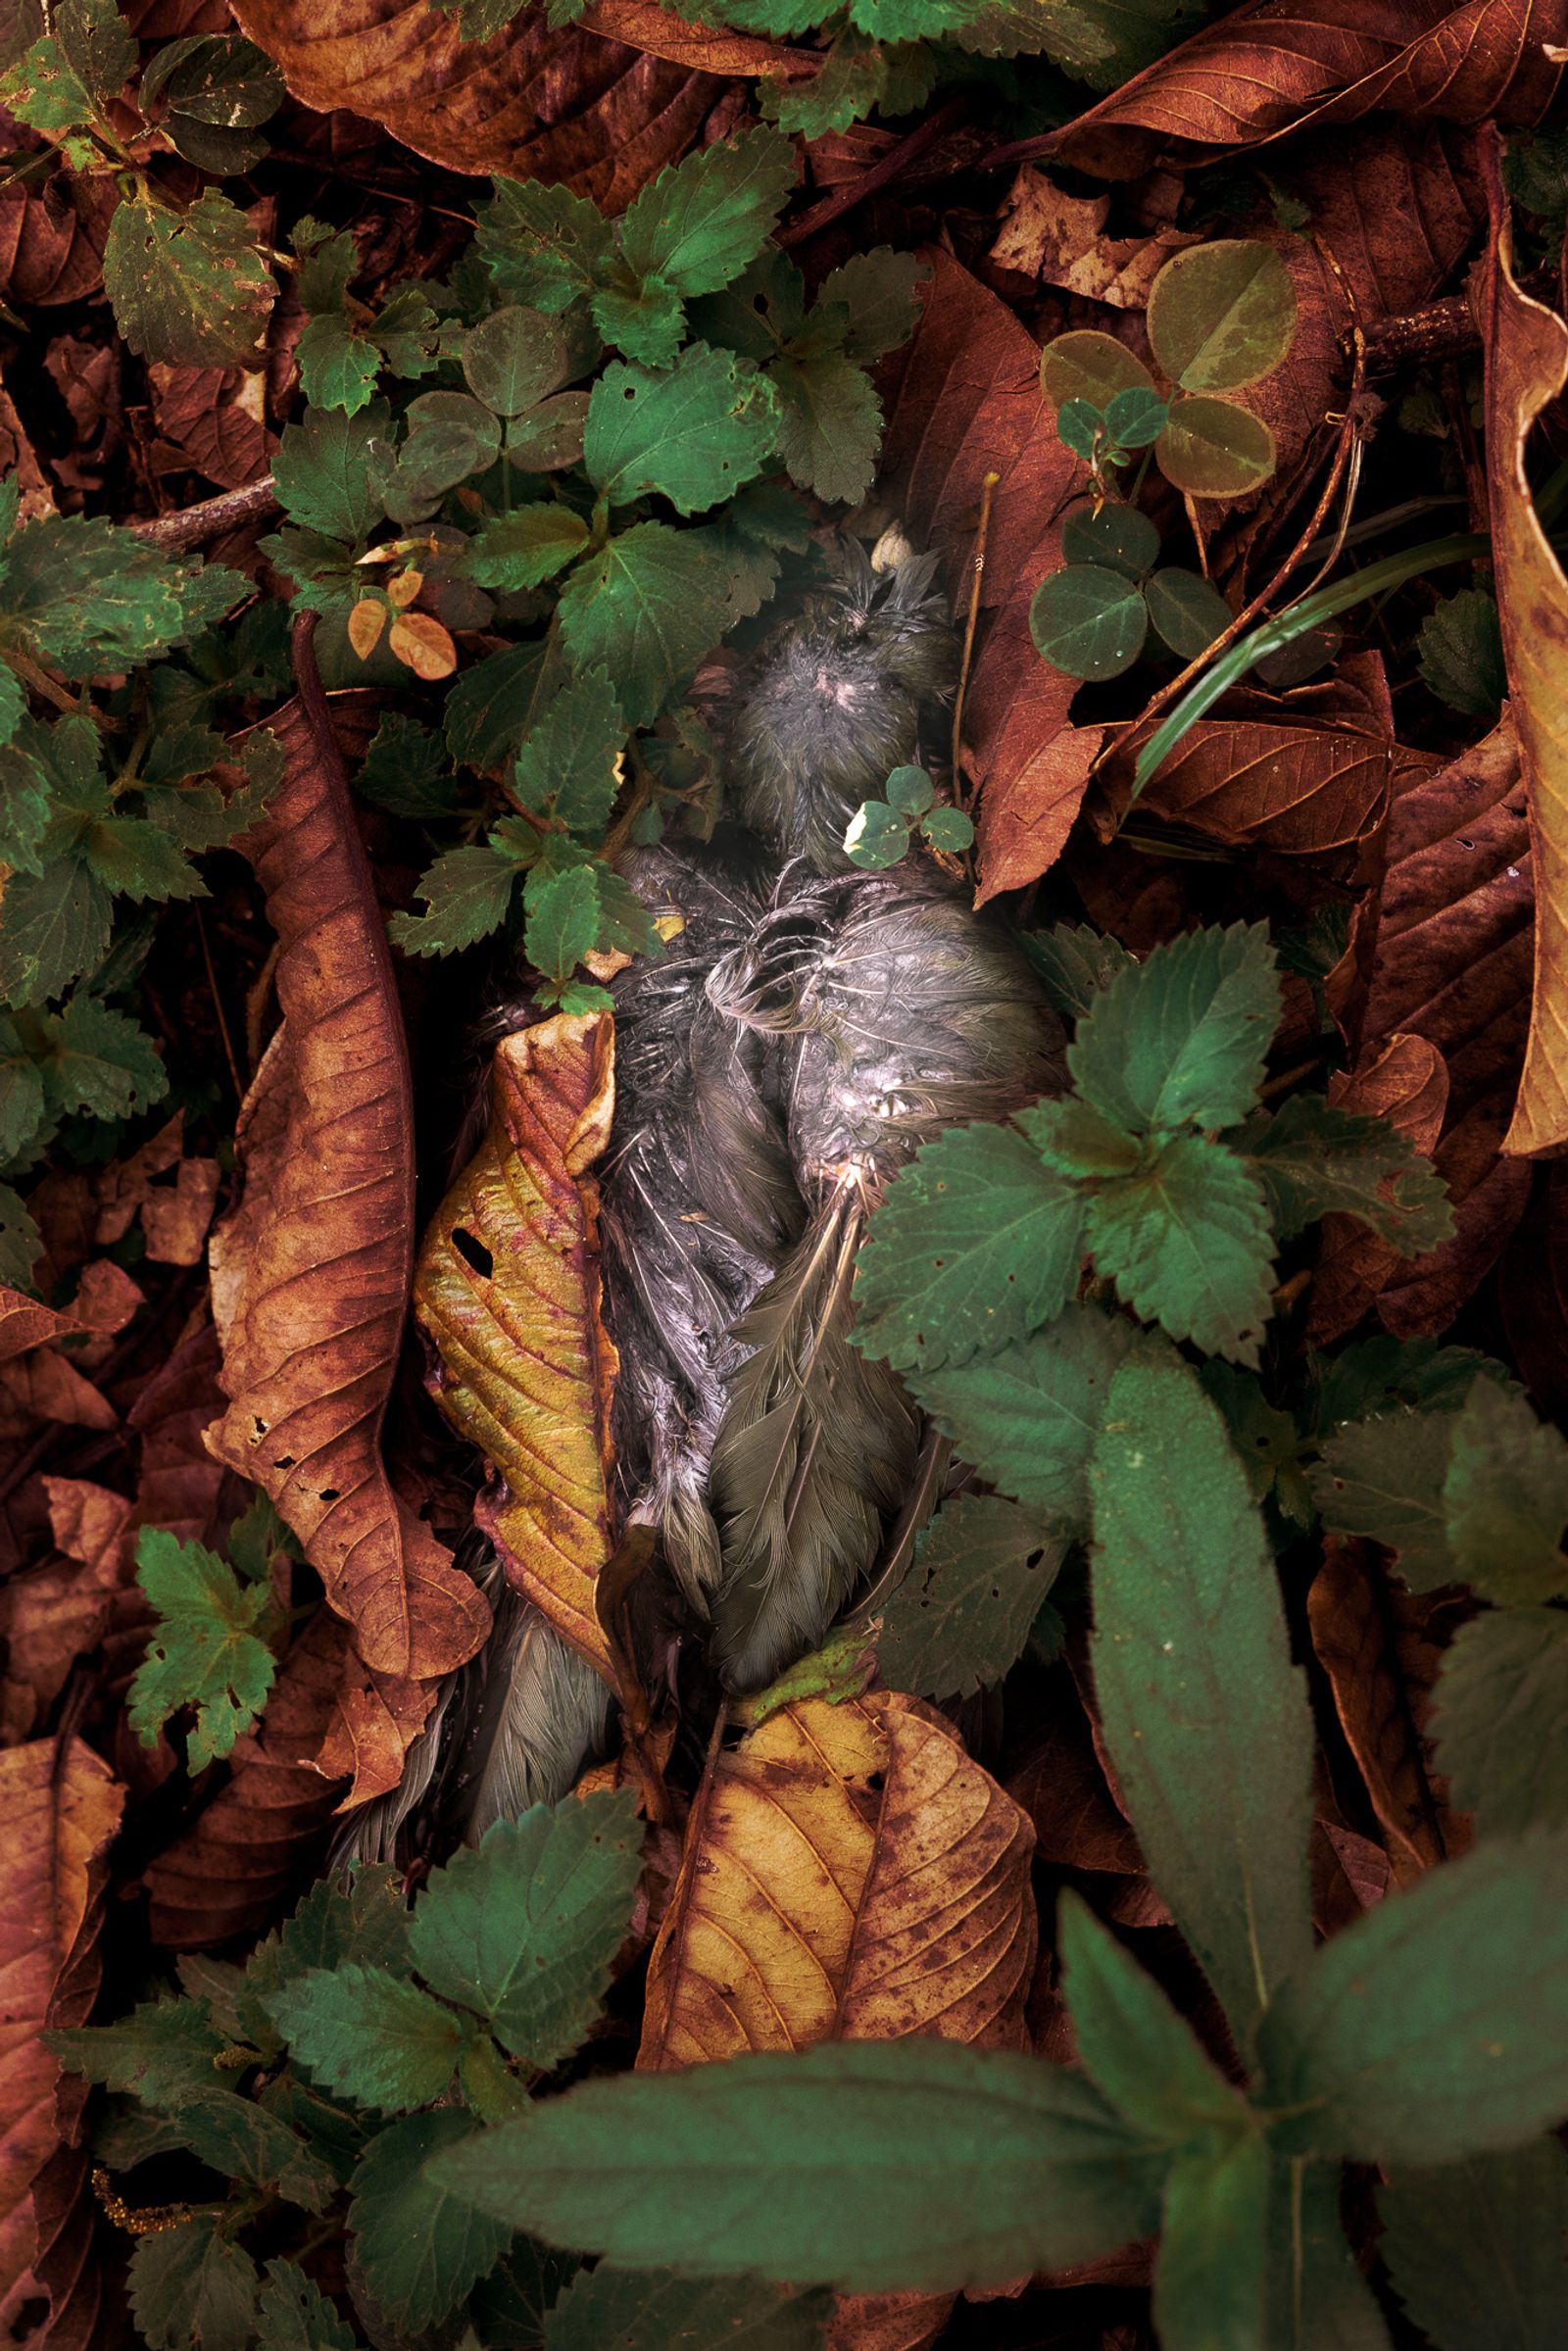 © Isadora Romero - A baby bird lies dead among the leaves in Altos, Paraguay